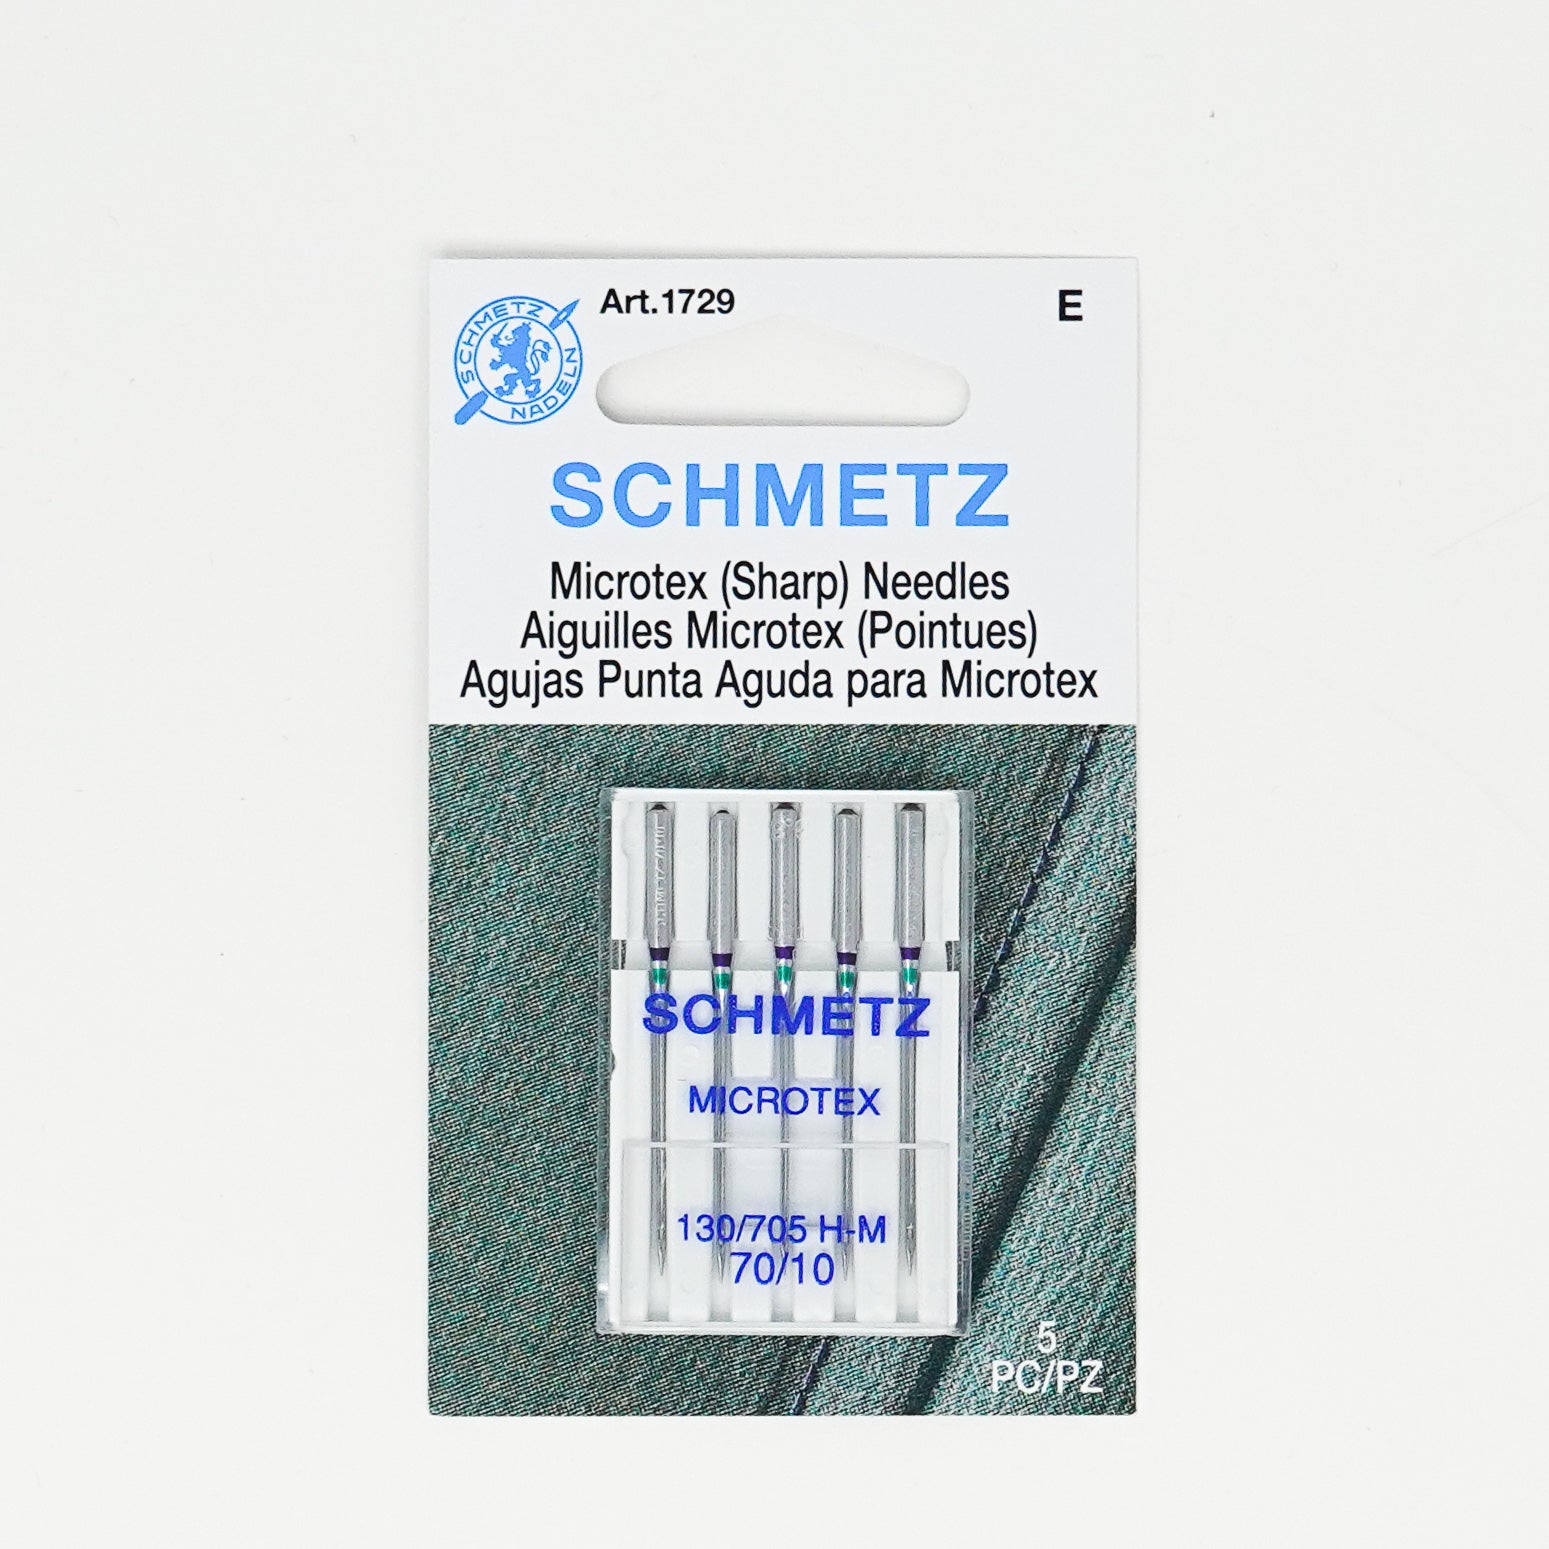 Schmetz Sewing Machine Needles - Microtex - 10/70 - set of 5